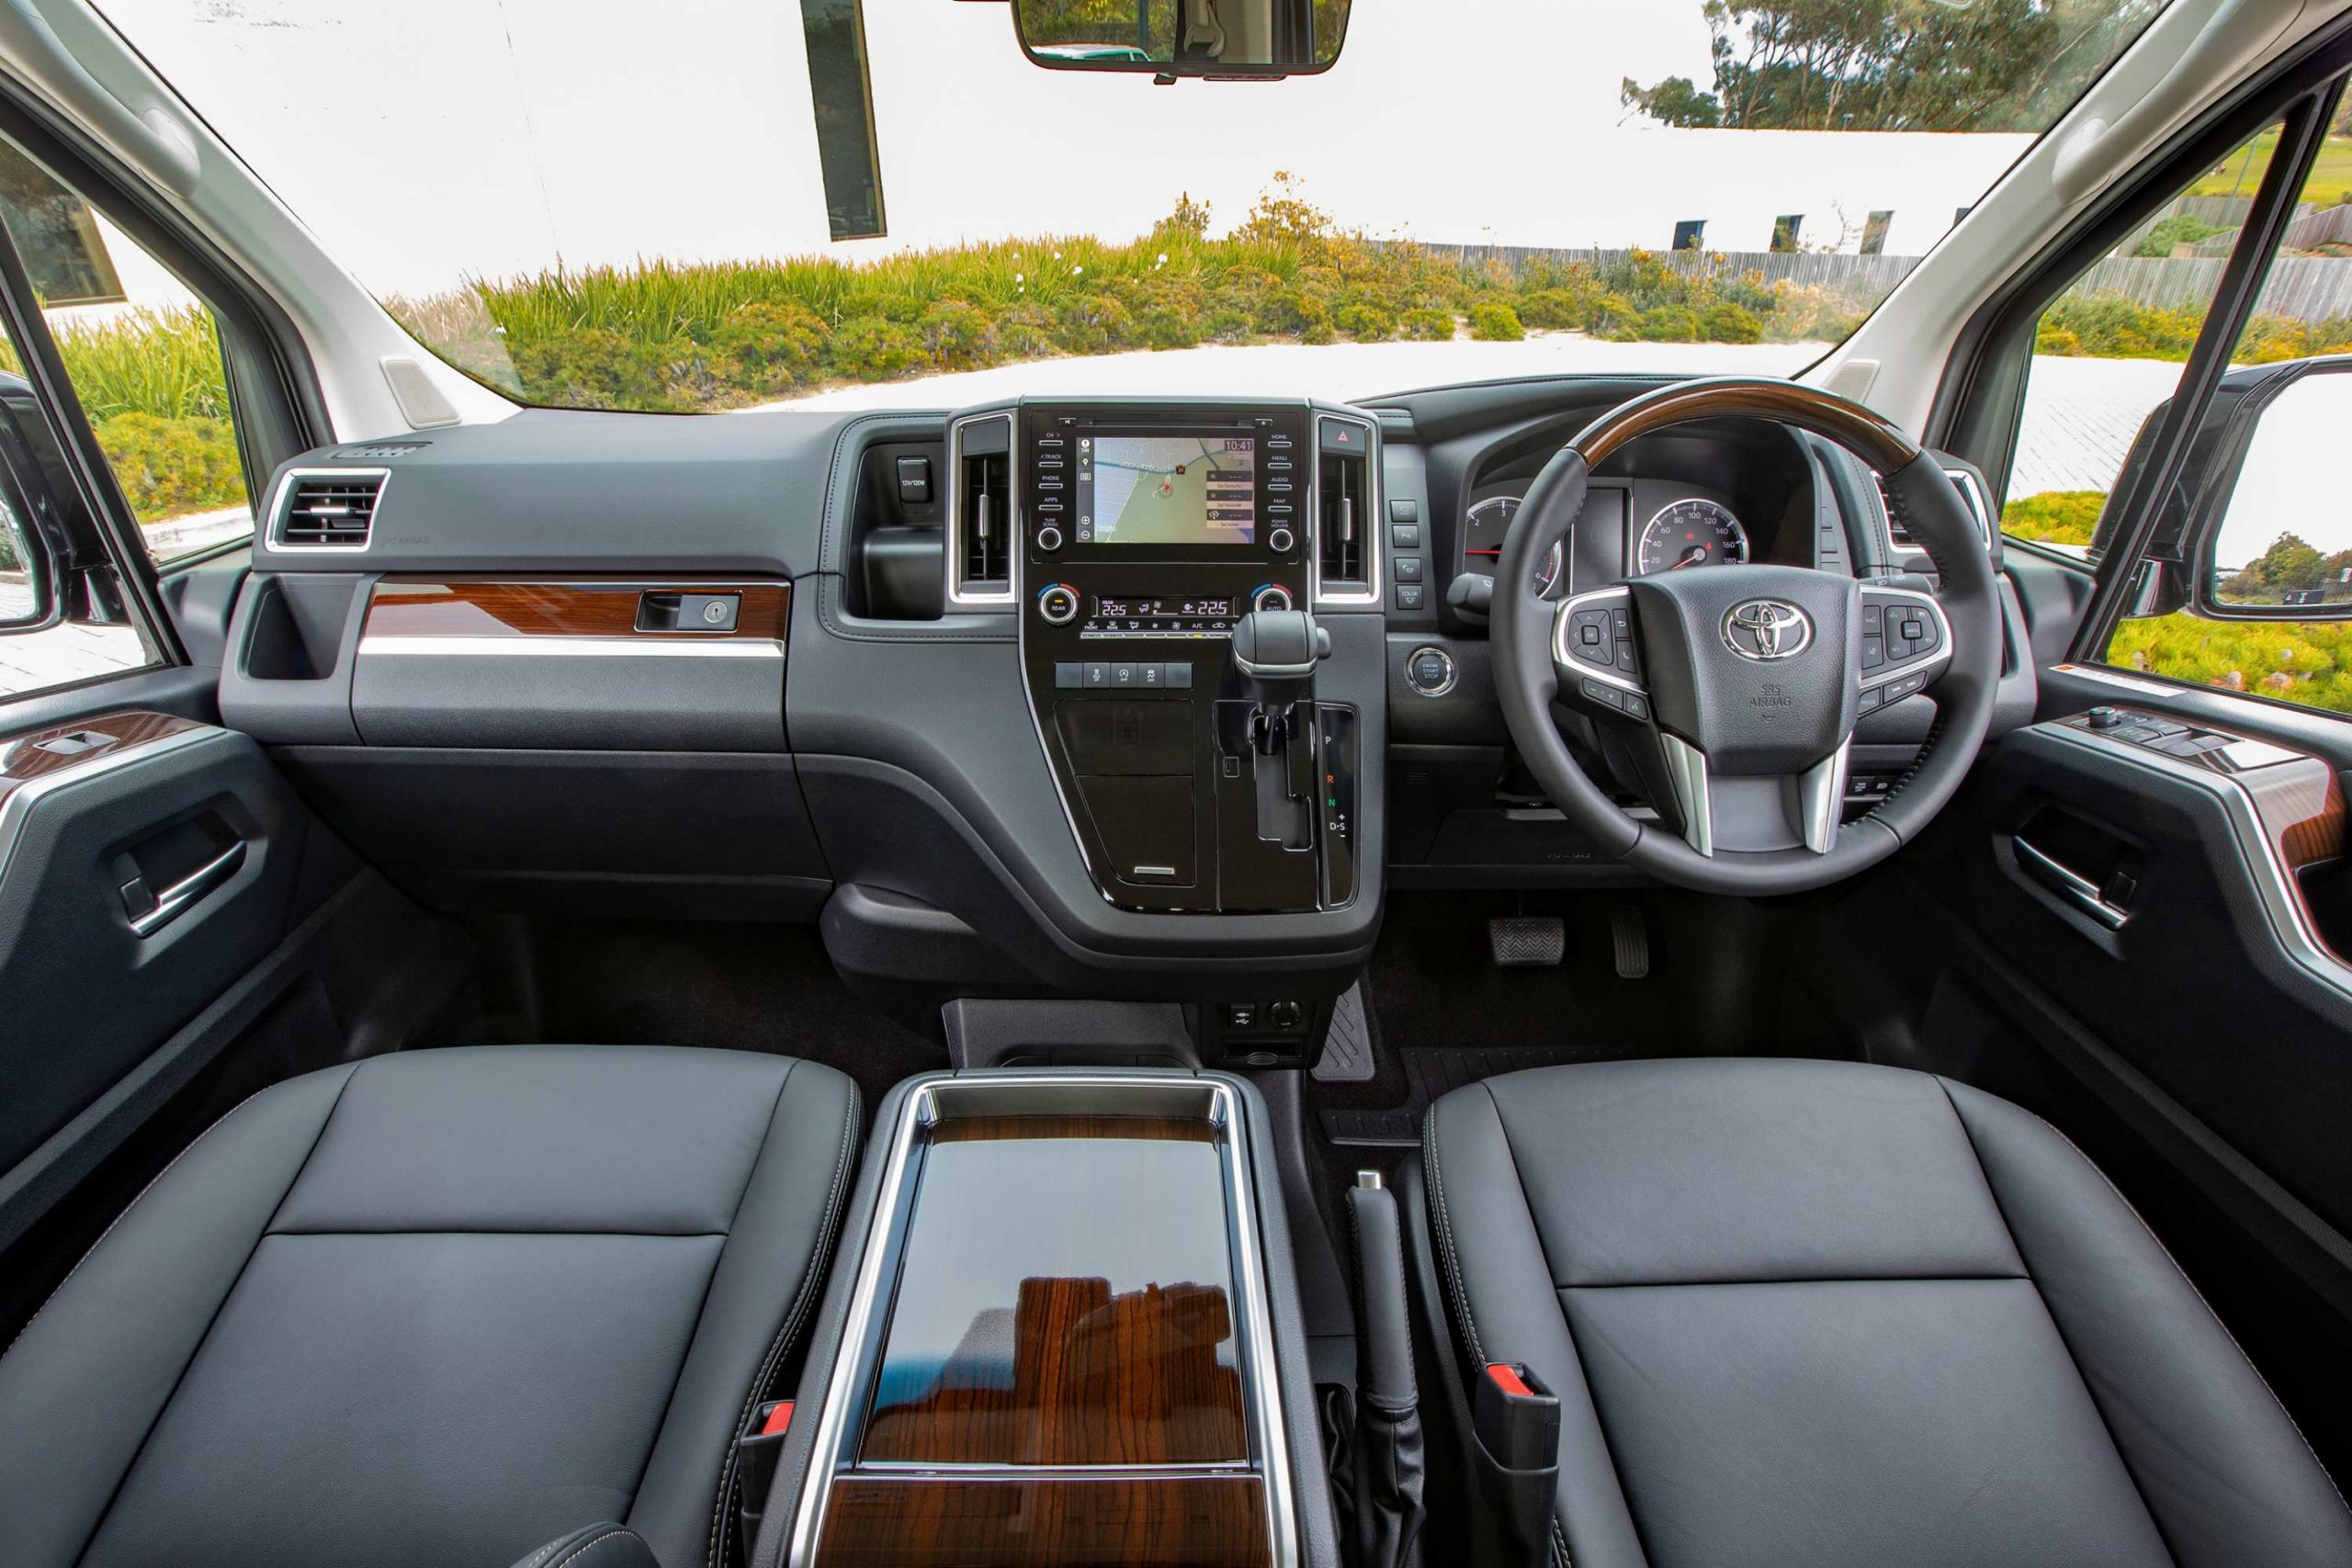 2019 Toyota Granvia VX interior.